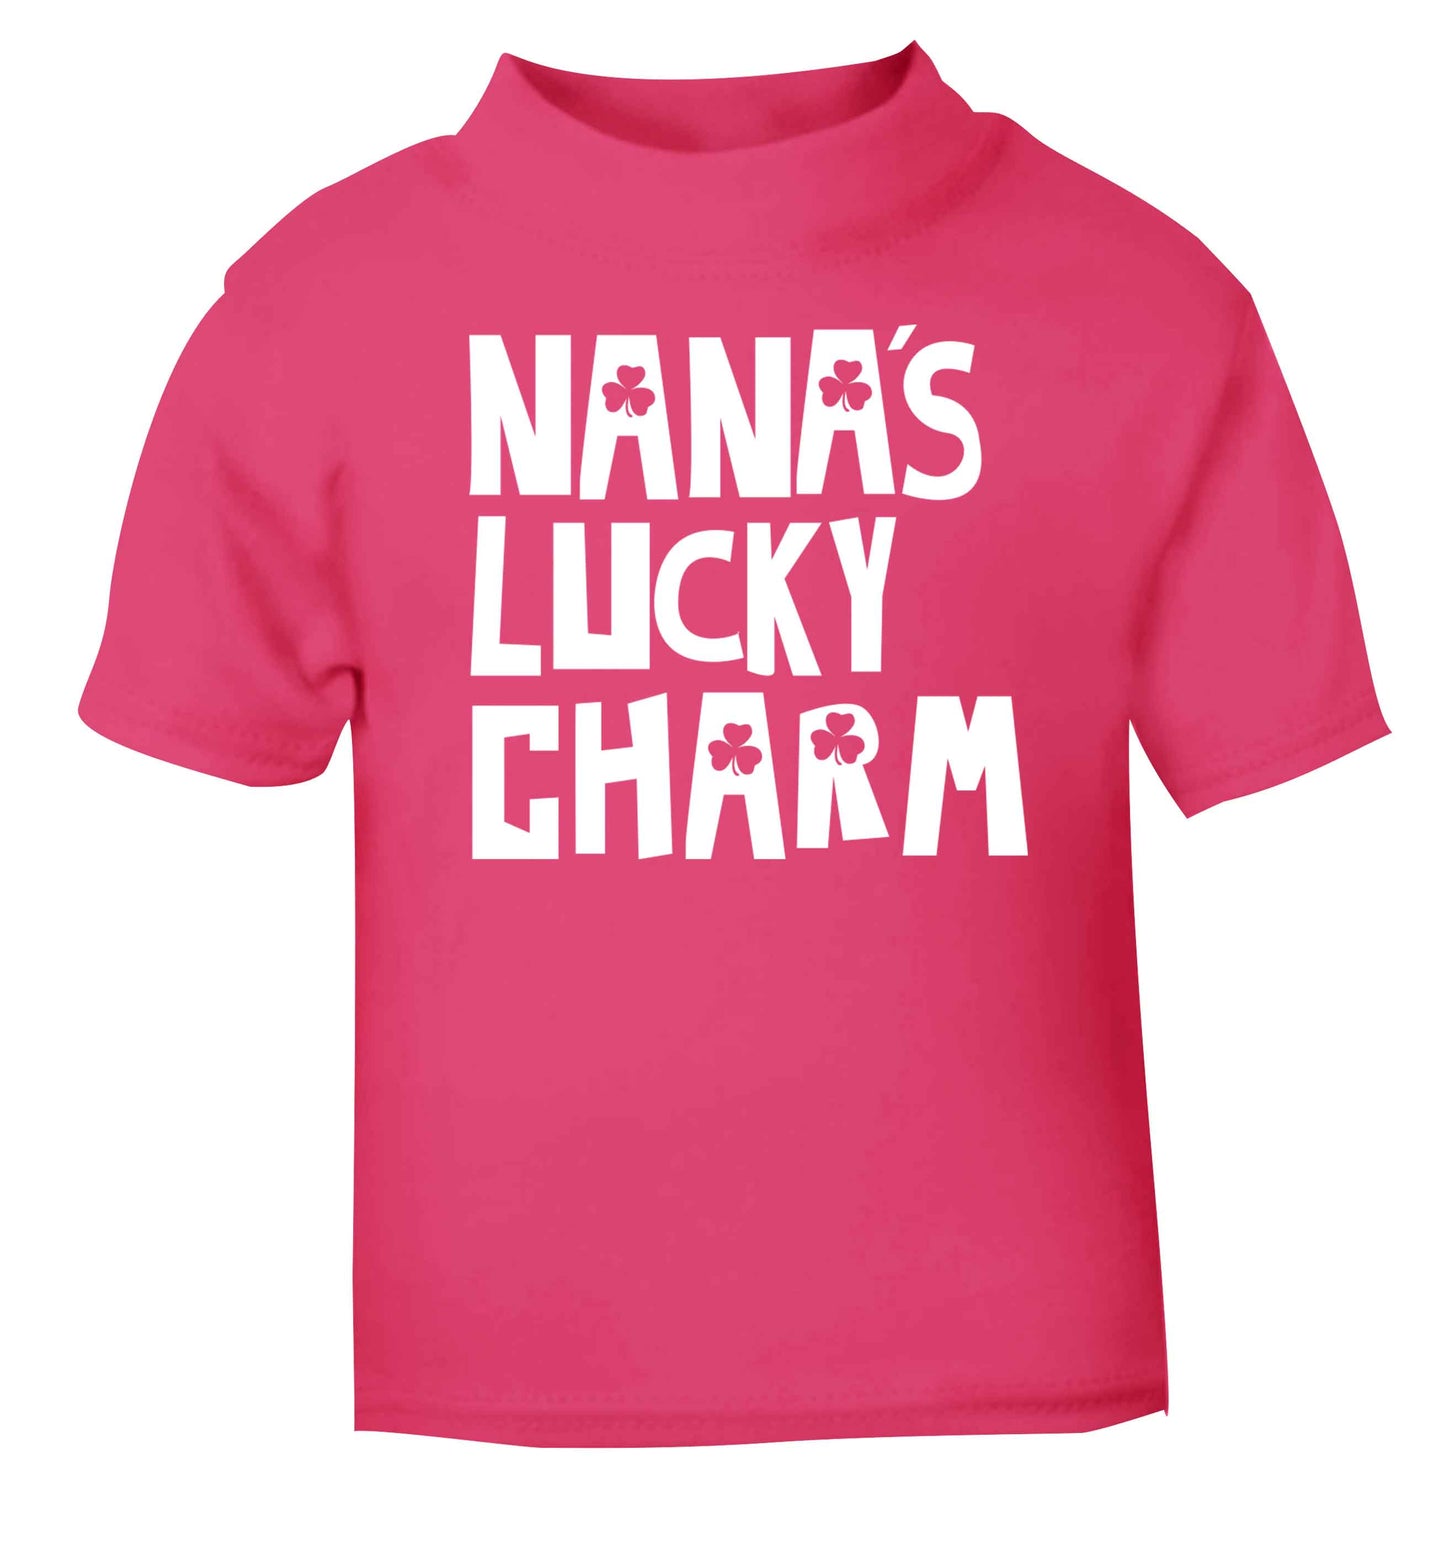 Nana's lucky charm pink baby toddler Tshirt 2 Years